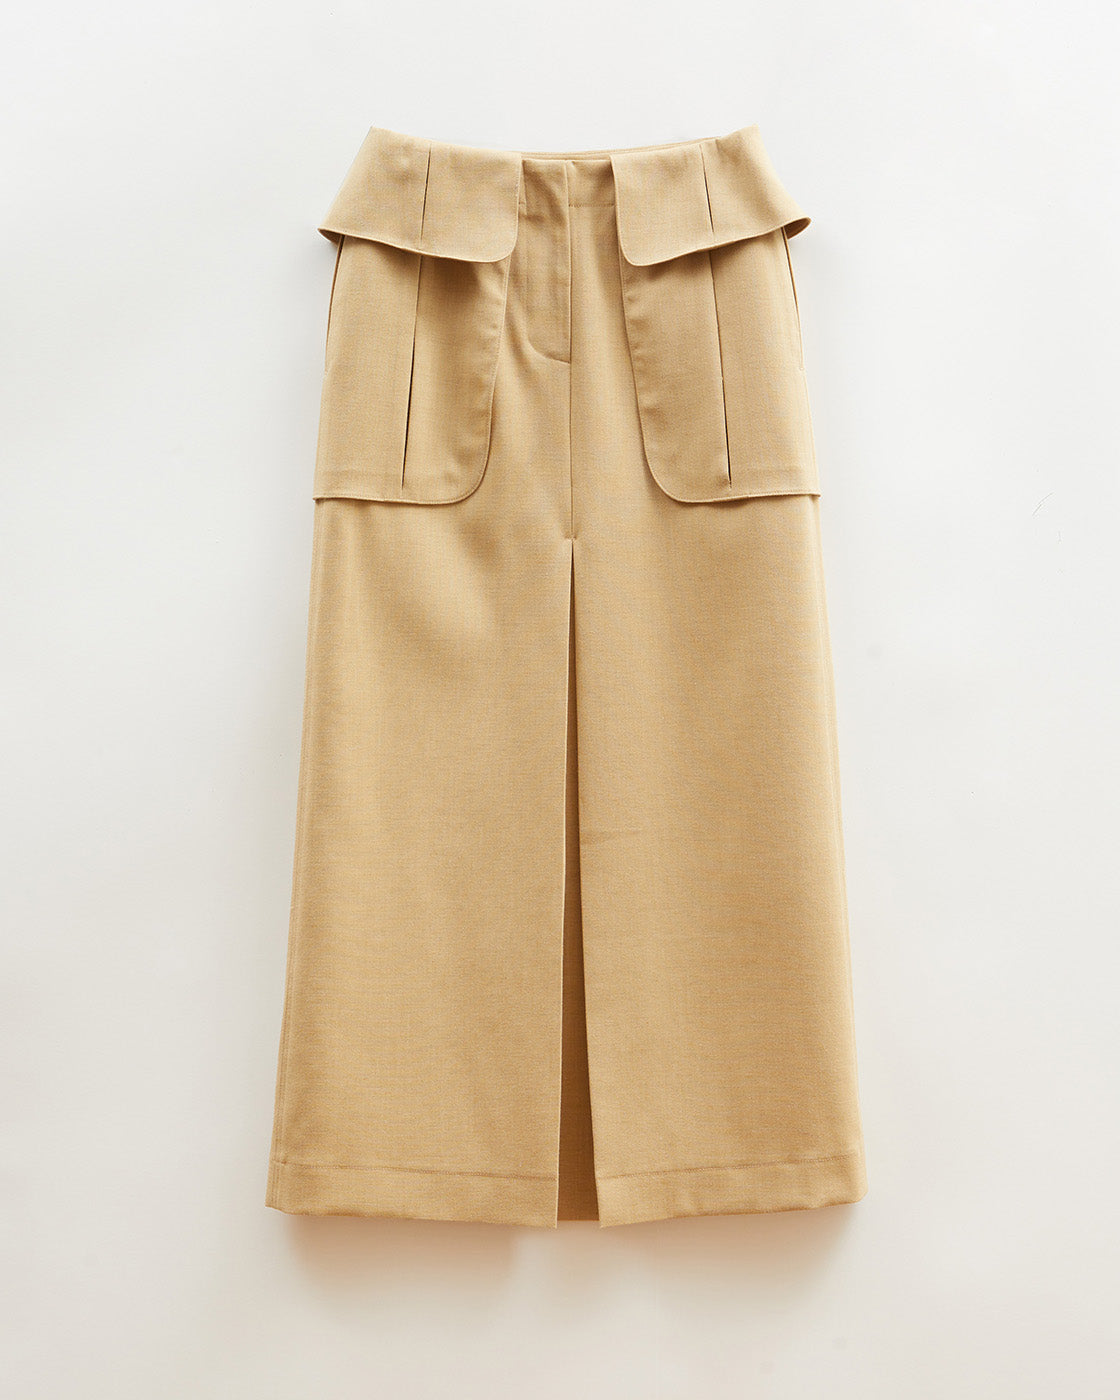 Lila Skirt Tencel Blend Suiting Beige